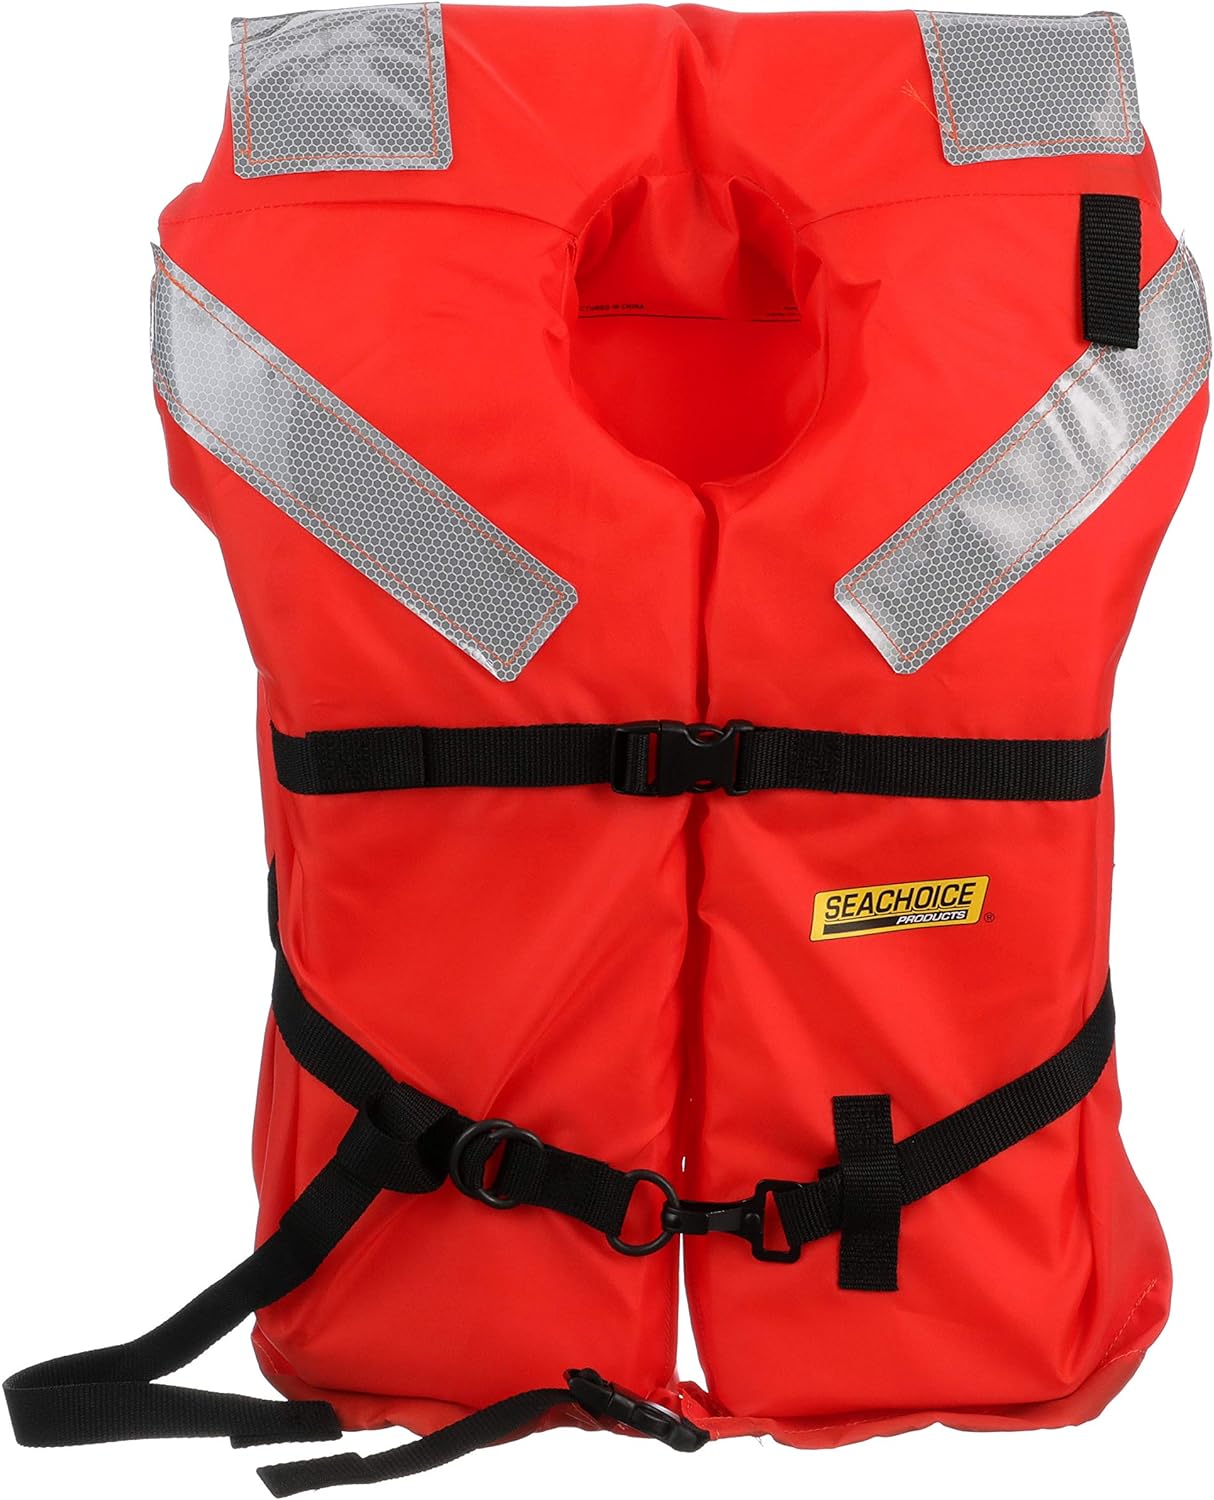 Seachoice Type I Commercial Offshore Vest & Jacket Review